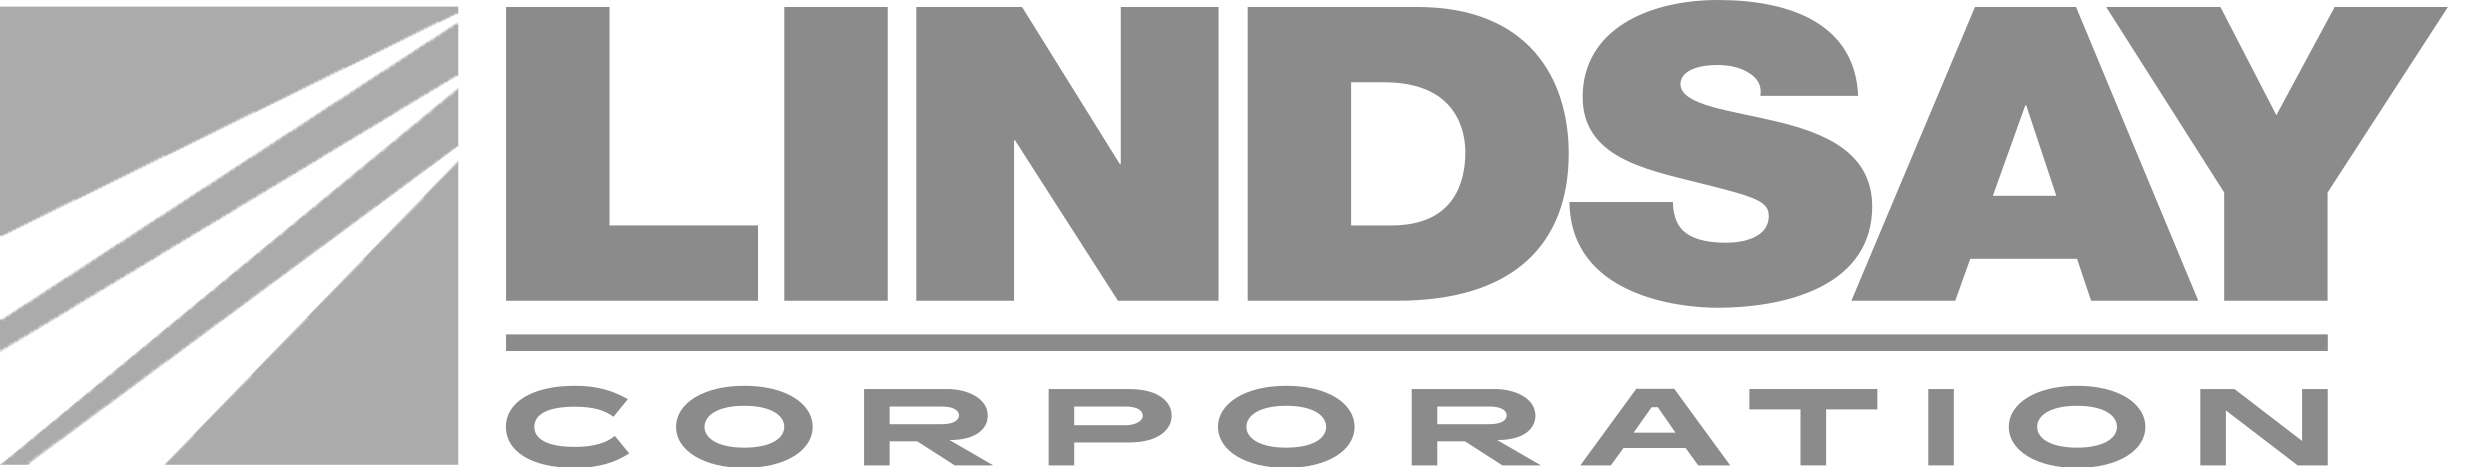 Lindsay corporation logo